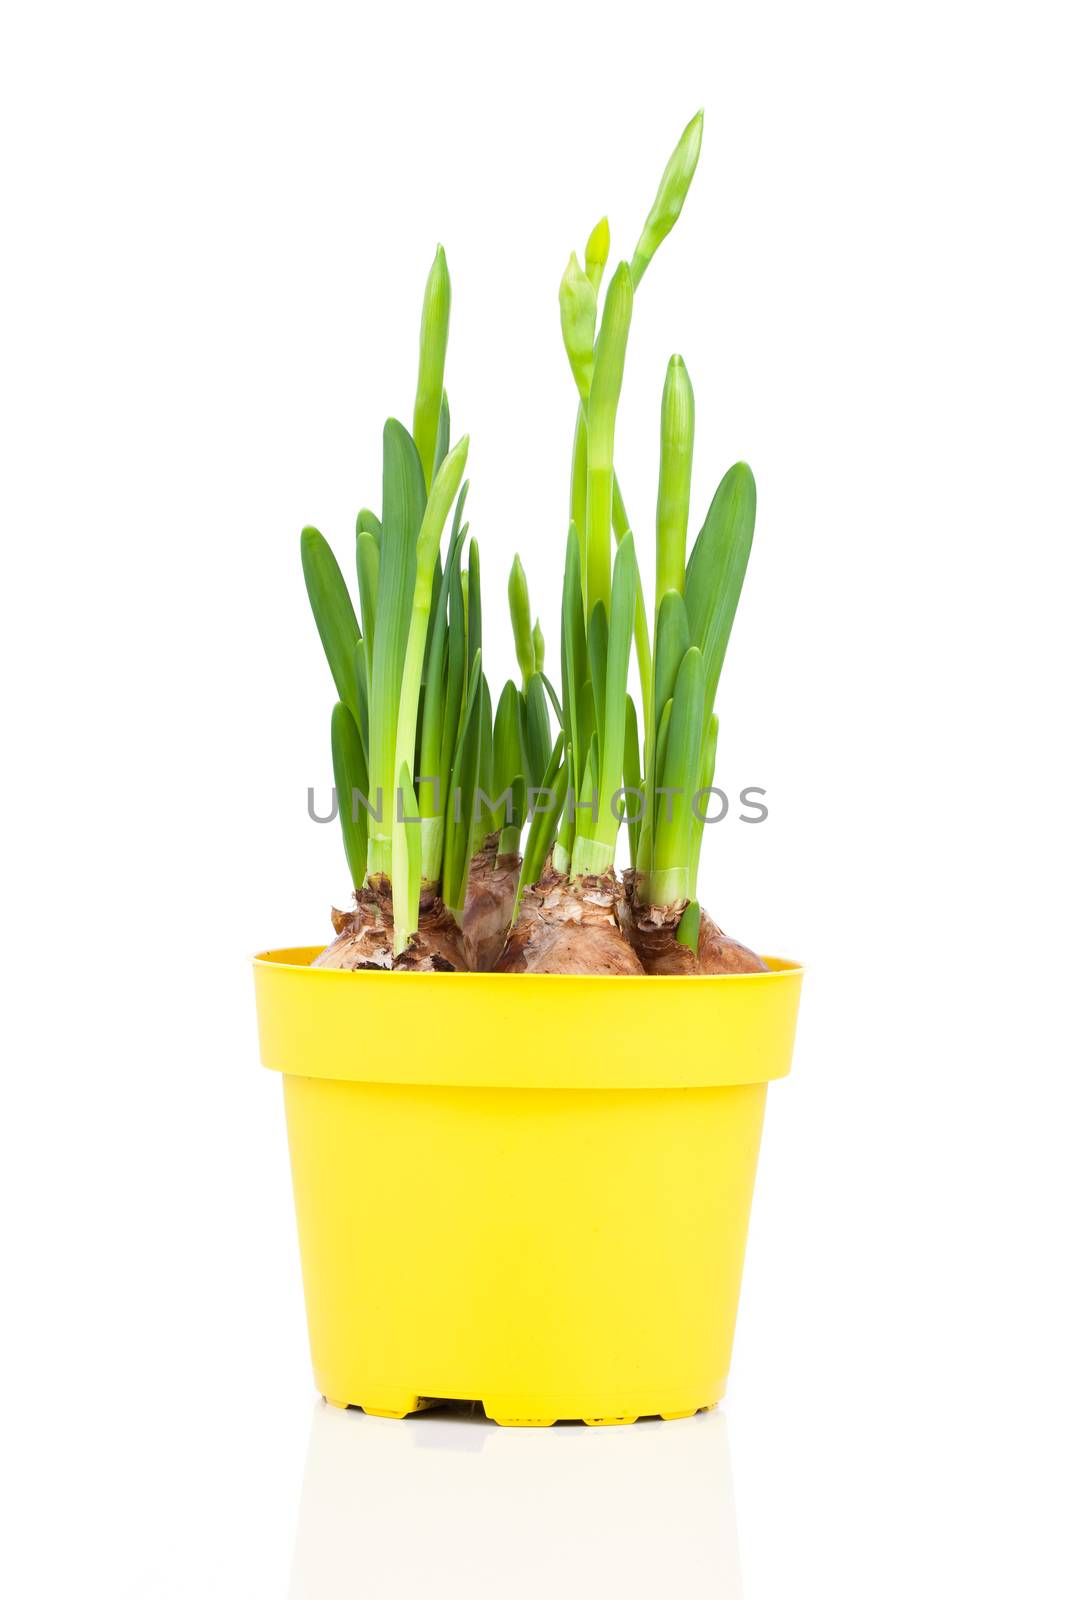 Daffodils (Narcissus) in flower pot by motorolka